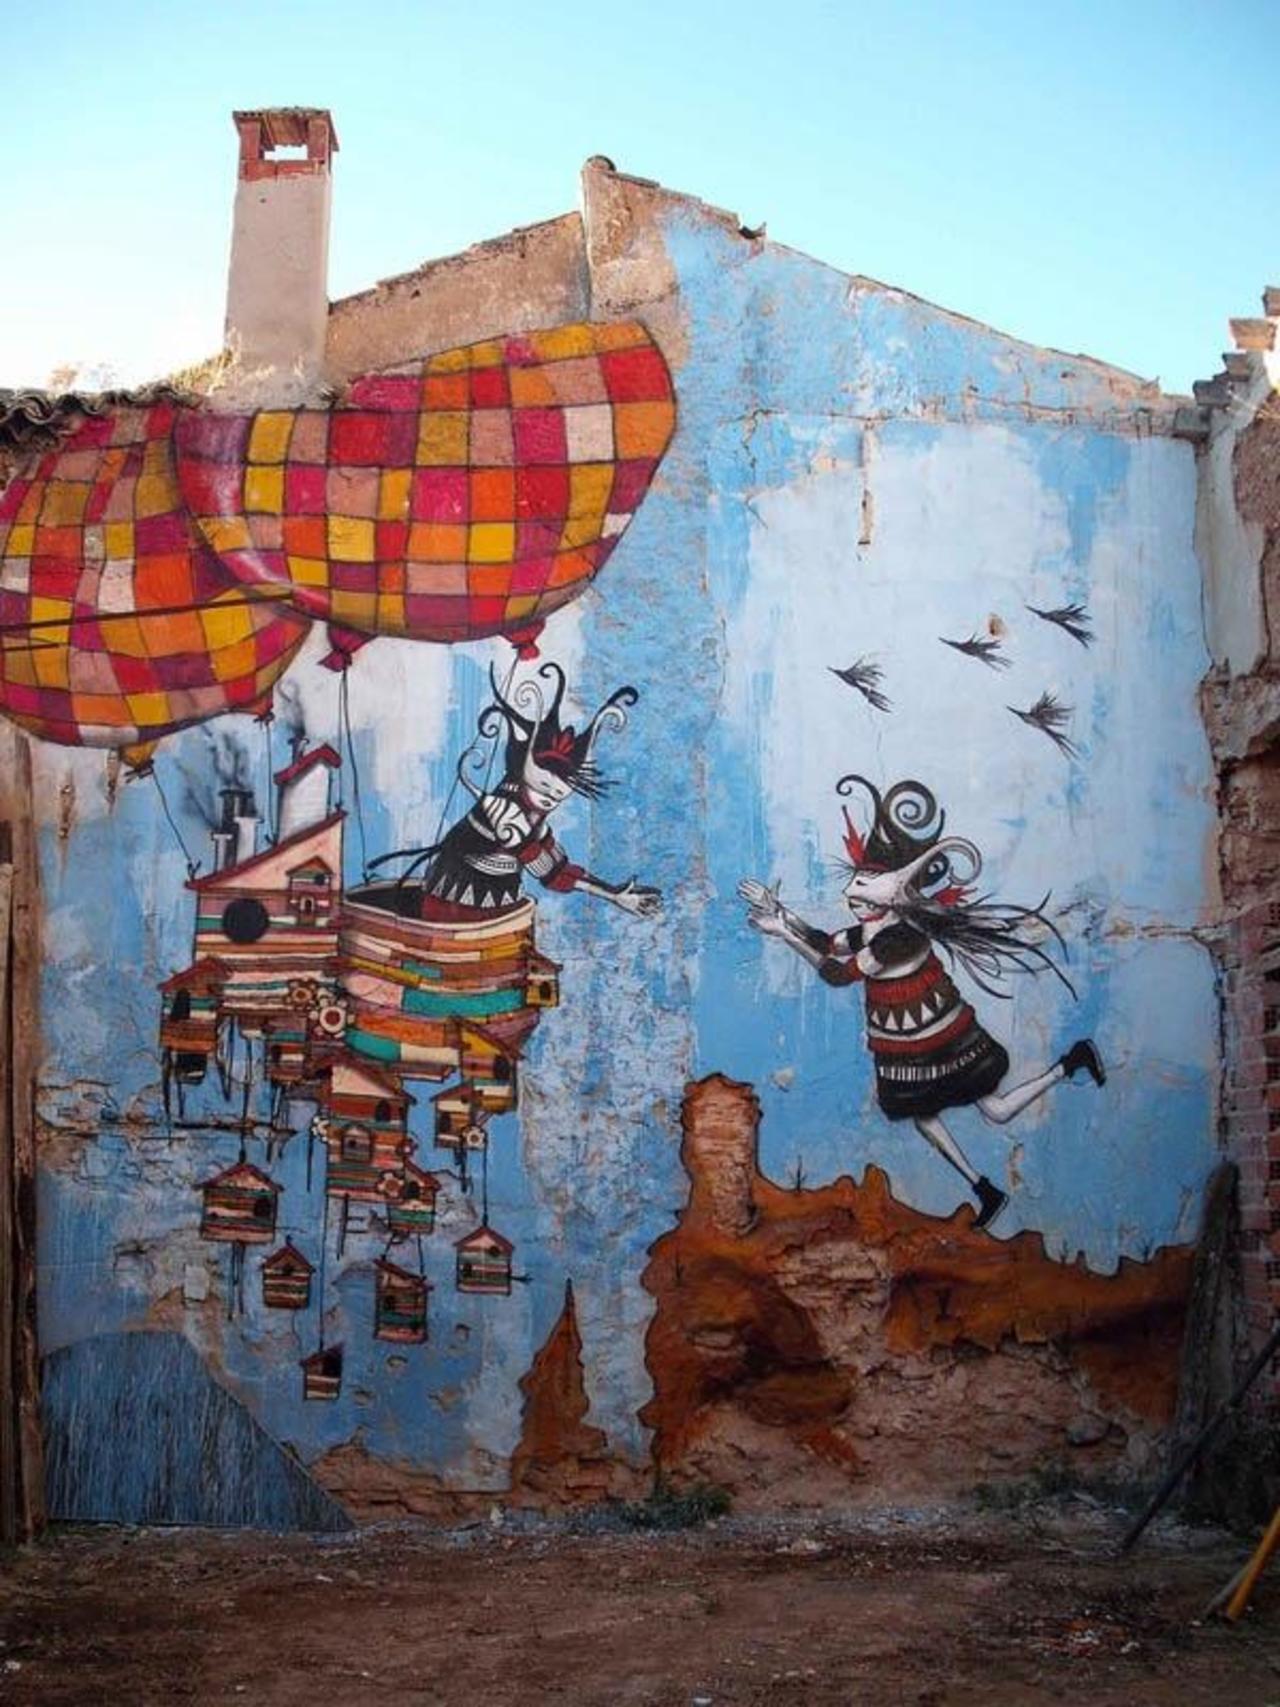 “@Pitchuskita: Artwork and Photography by SKOUNT

#streetart #art #graffiti #urbanart #mural http://t.co/yKxMHDSNYZ